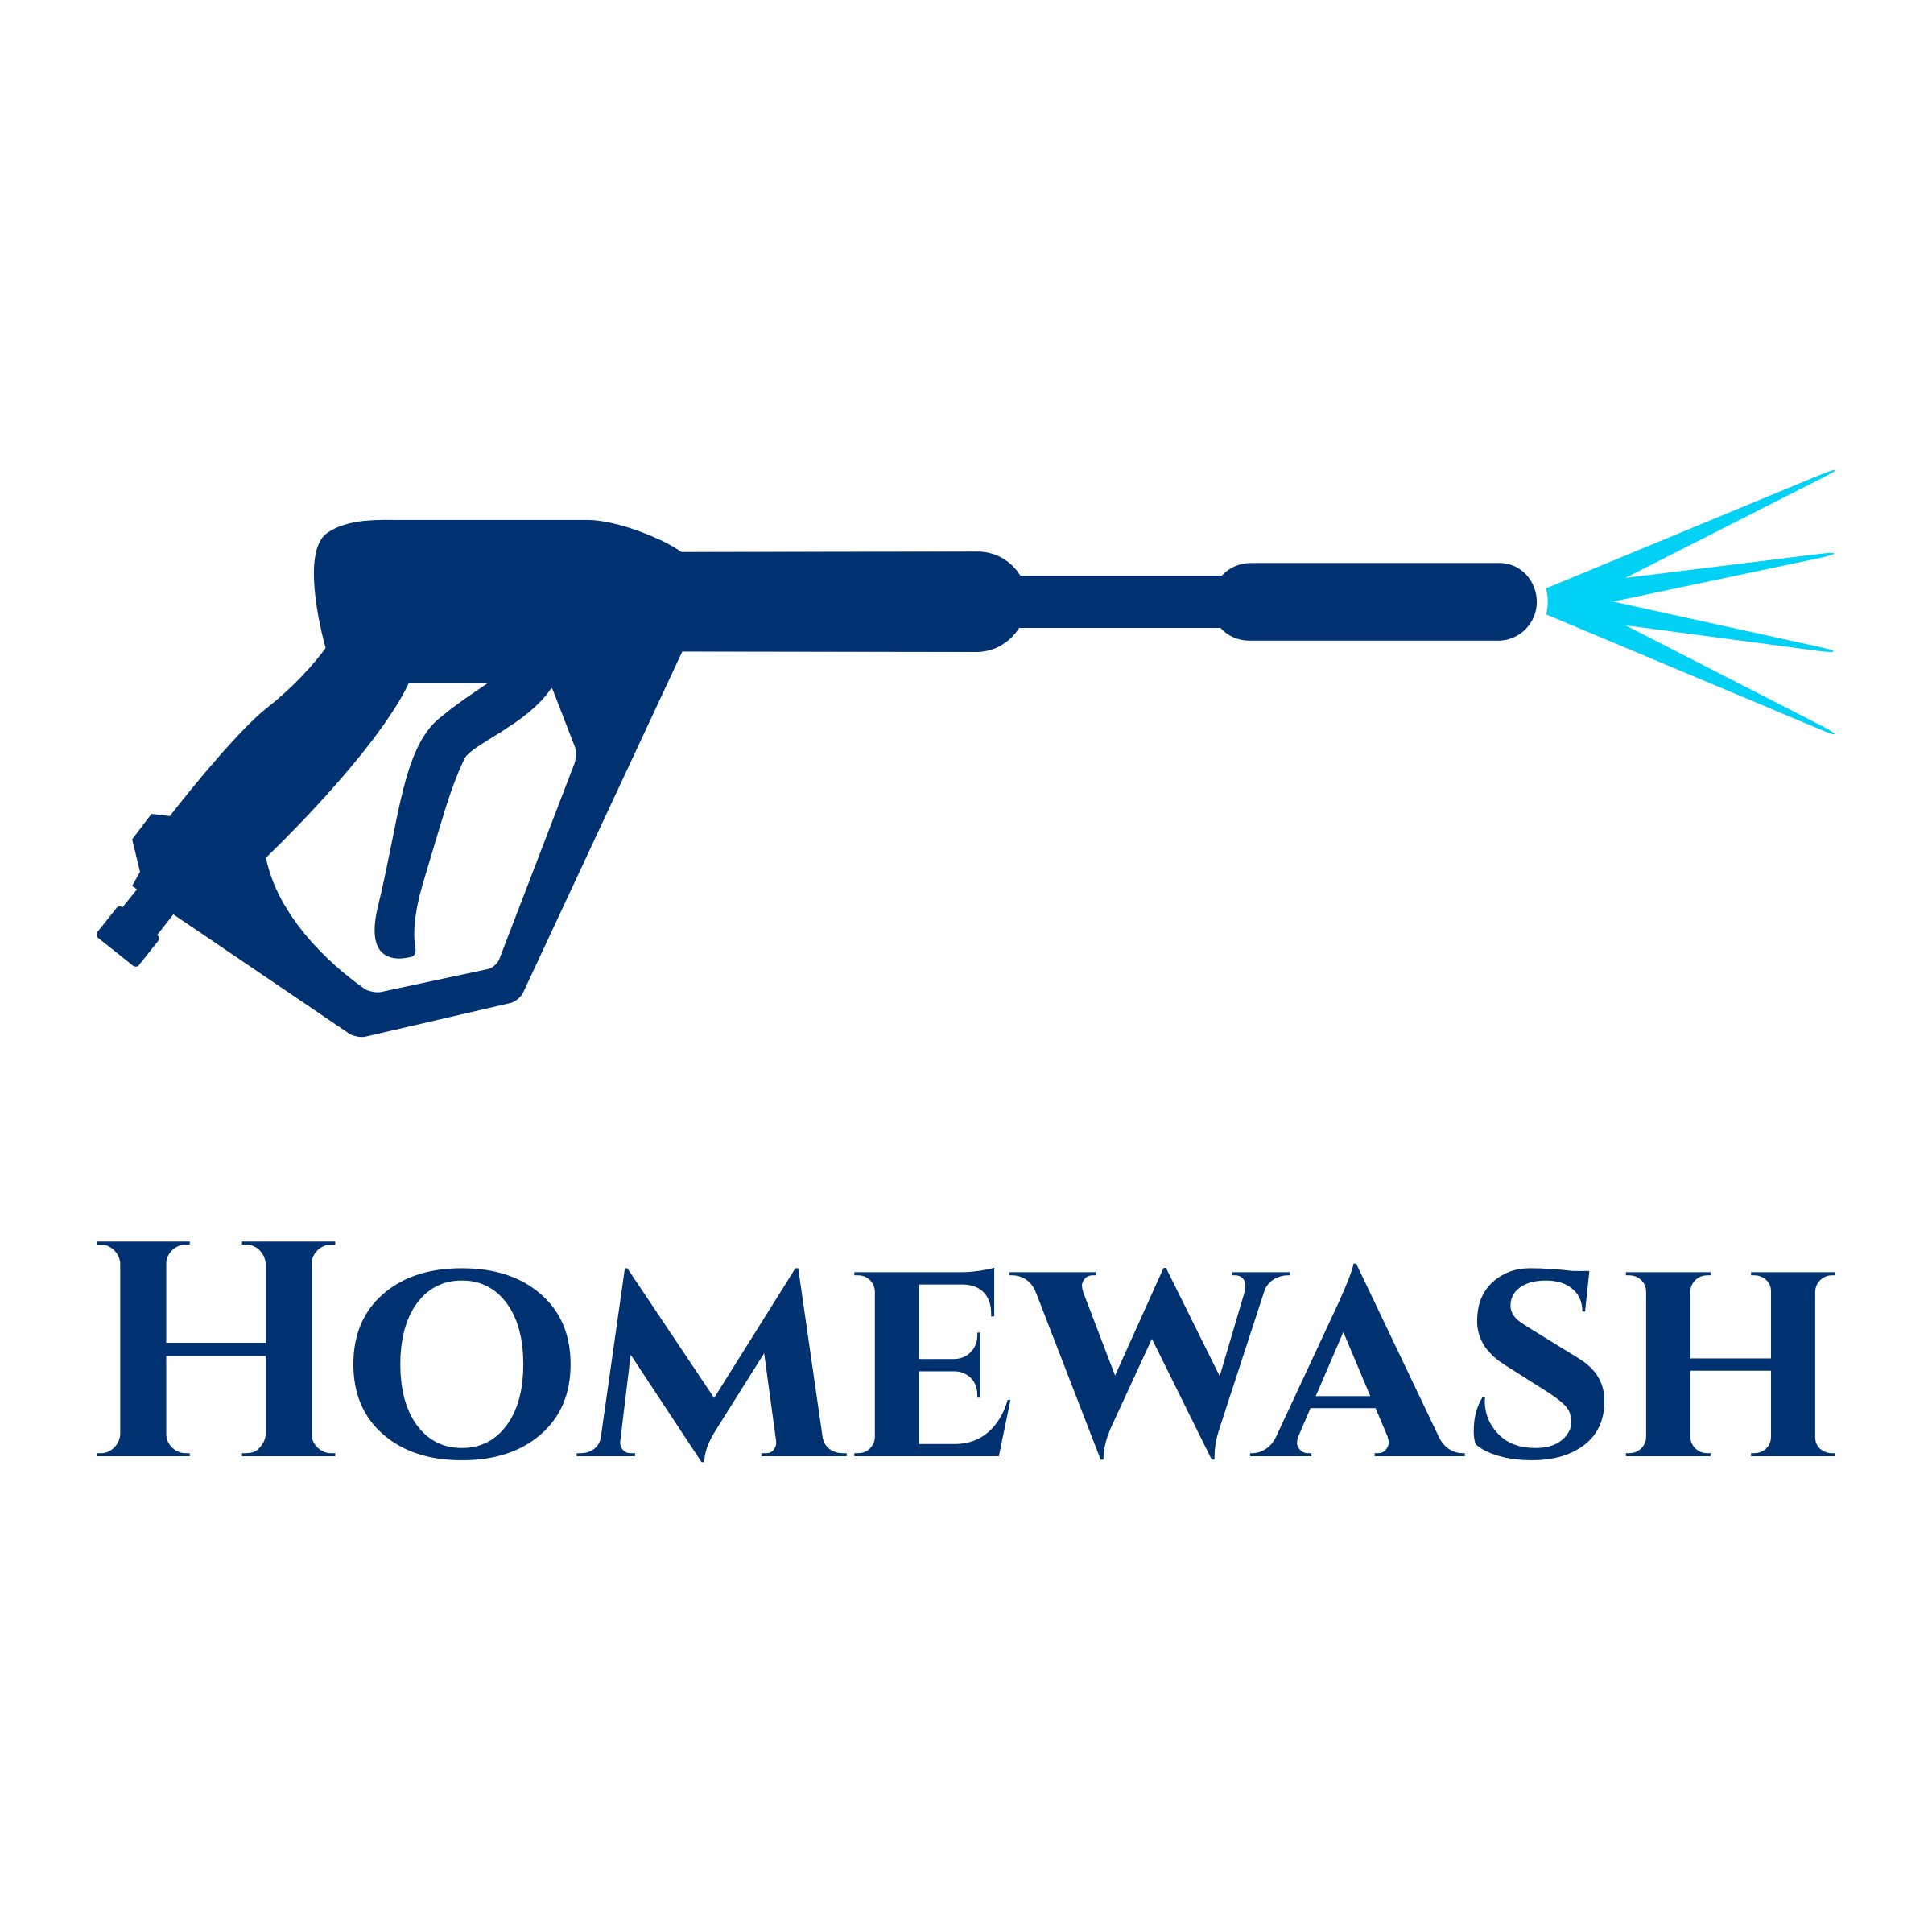 pressure washing logo ideas